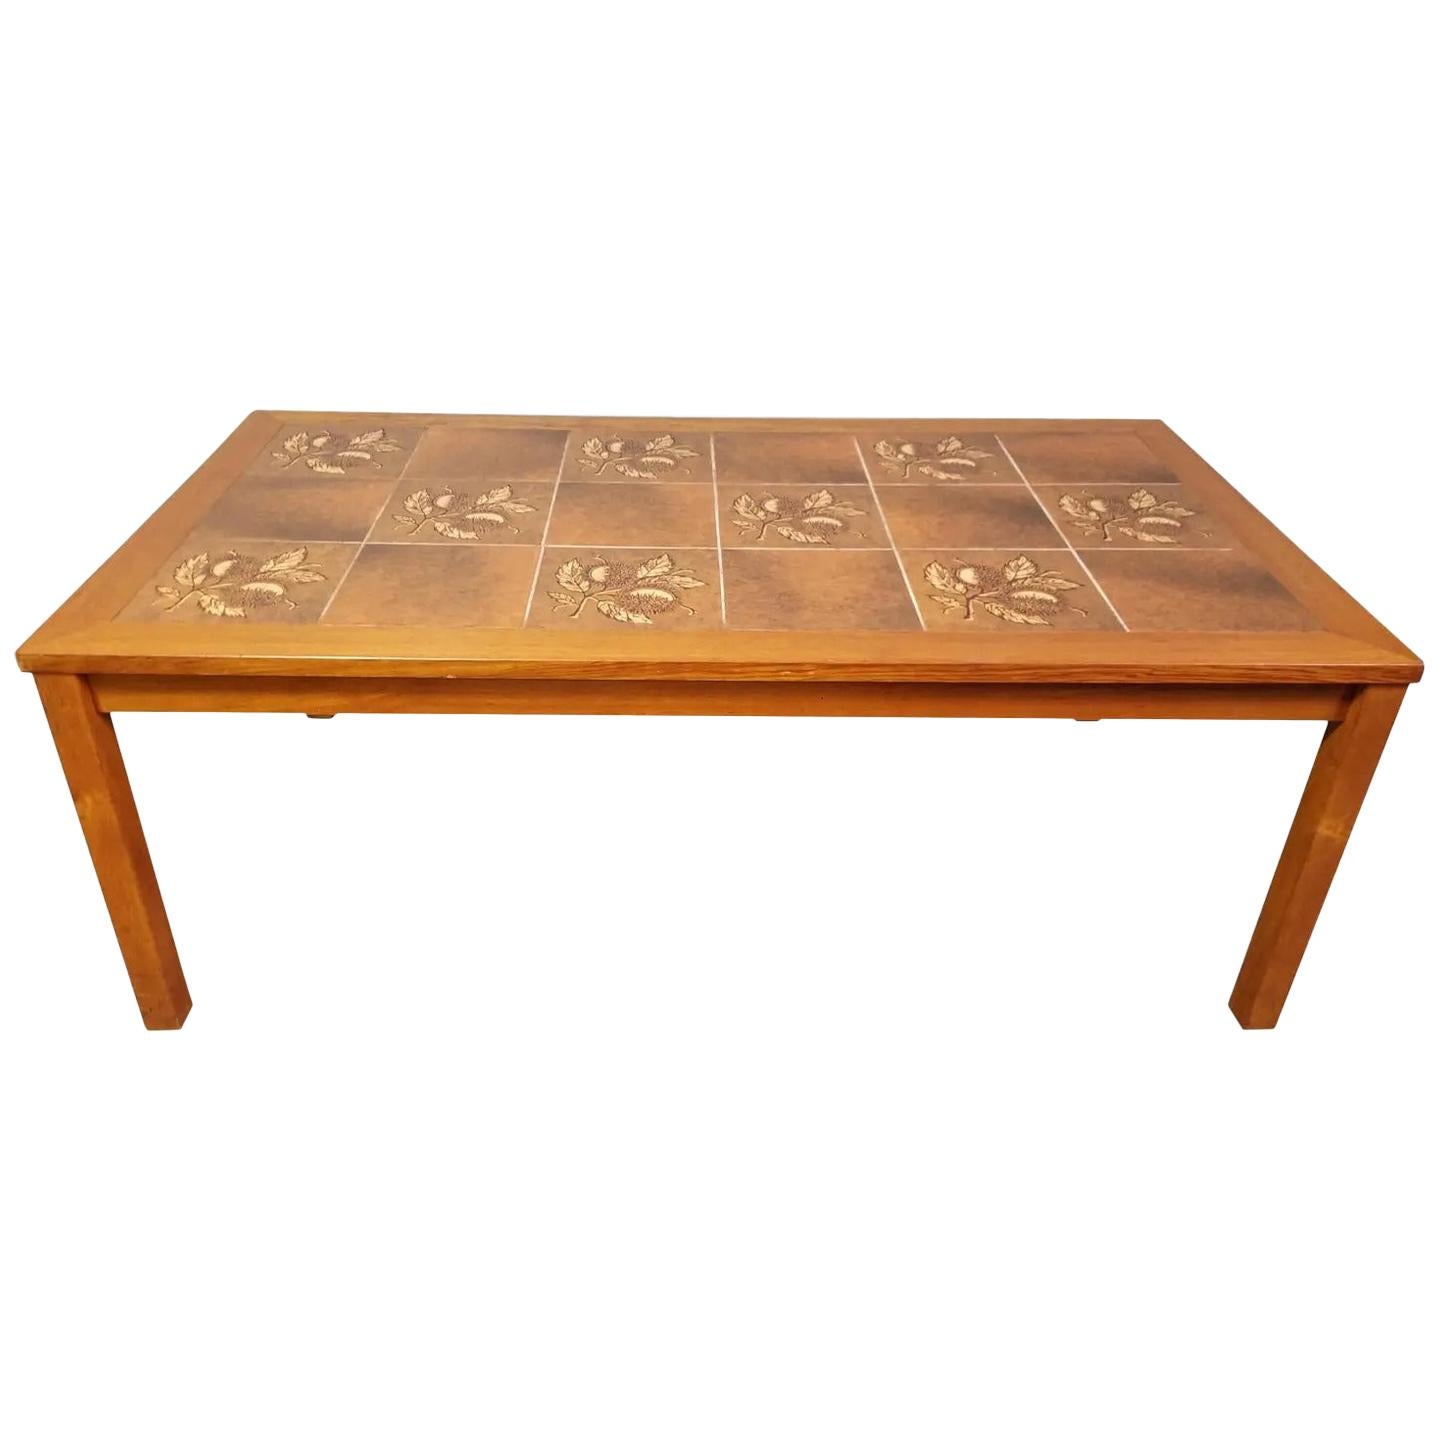 Danish Modern Tile Top Coffee Table